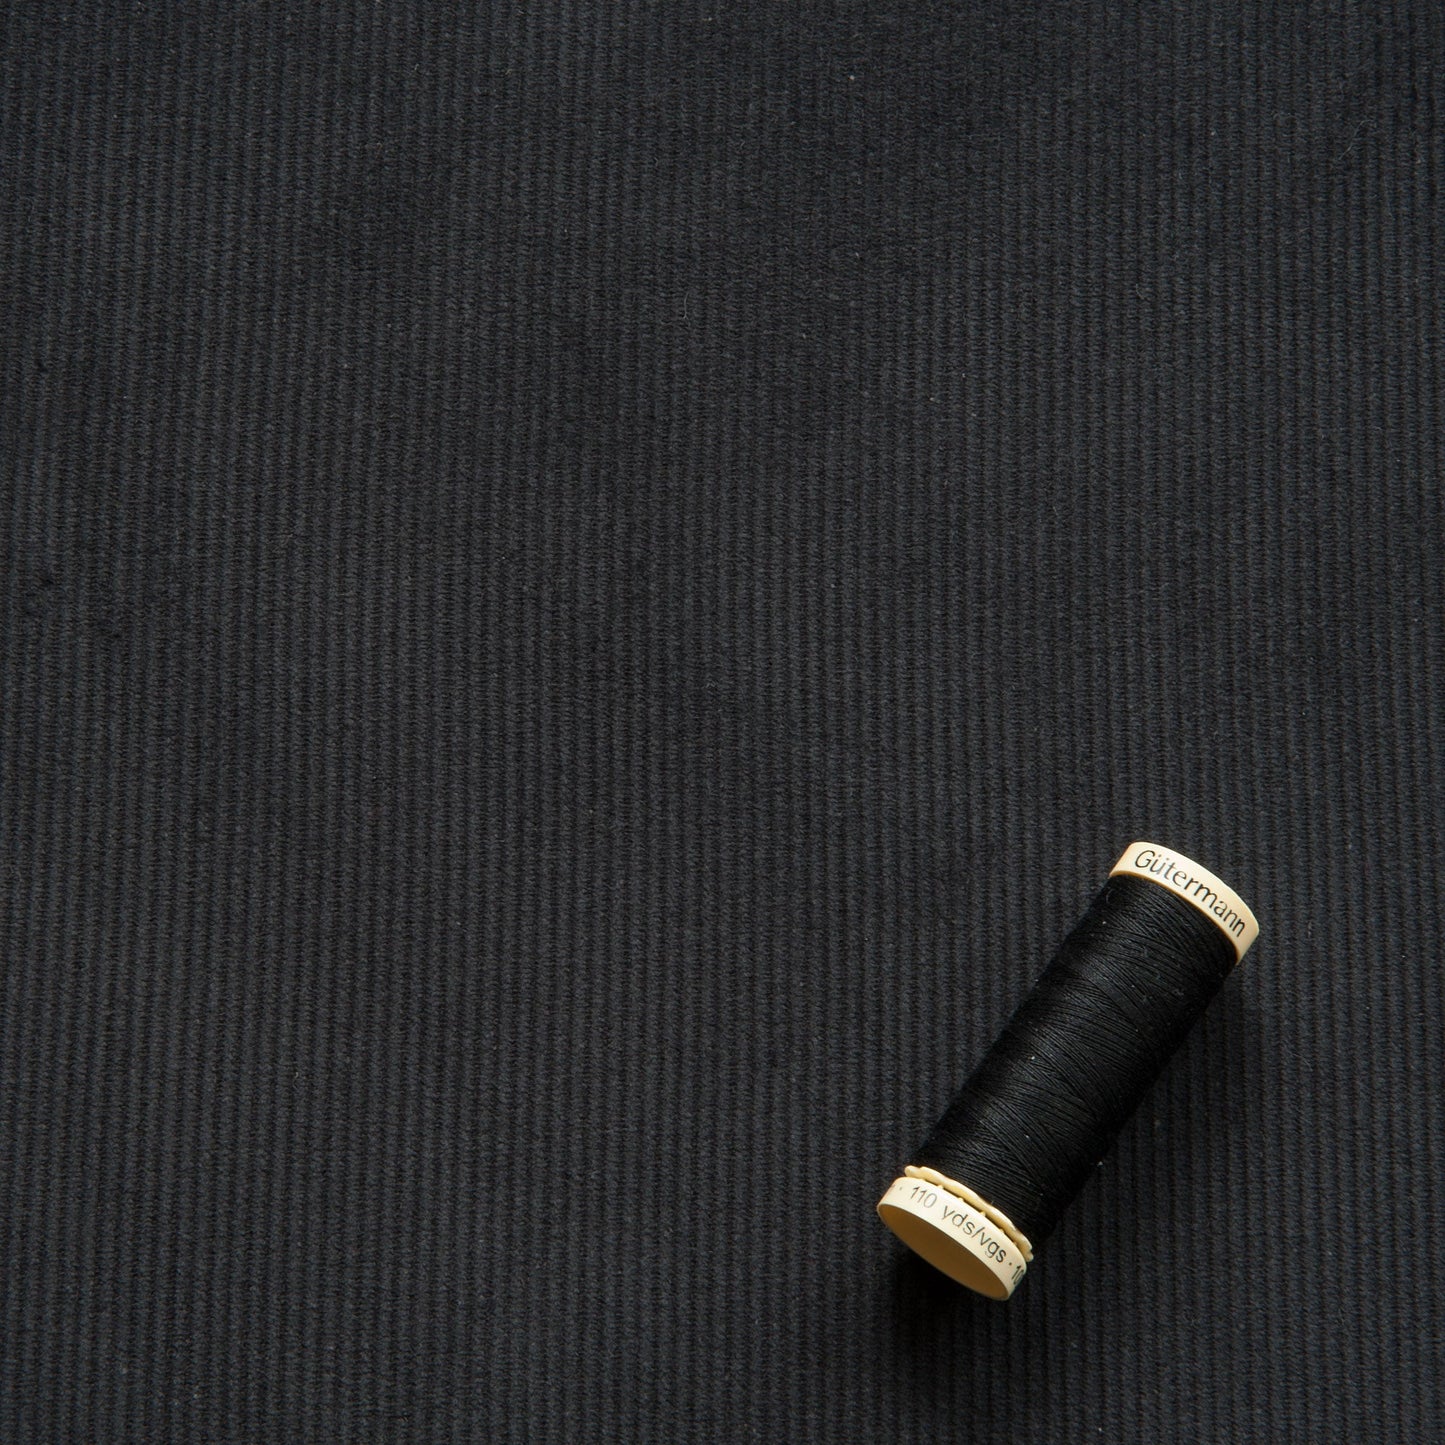 Cotton Corduroy Fabric in Black